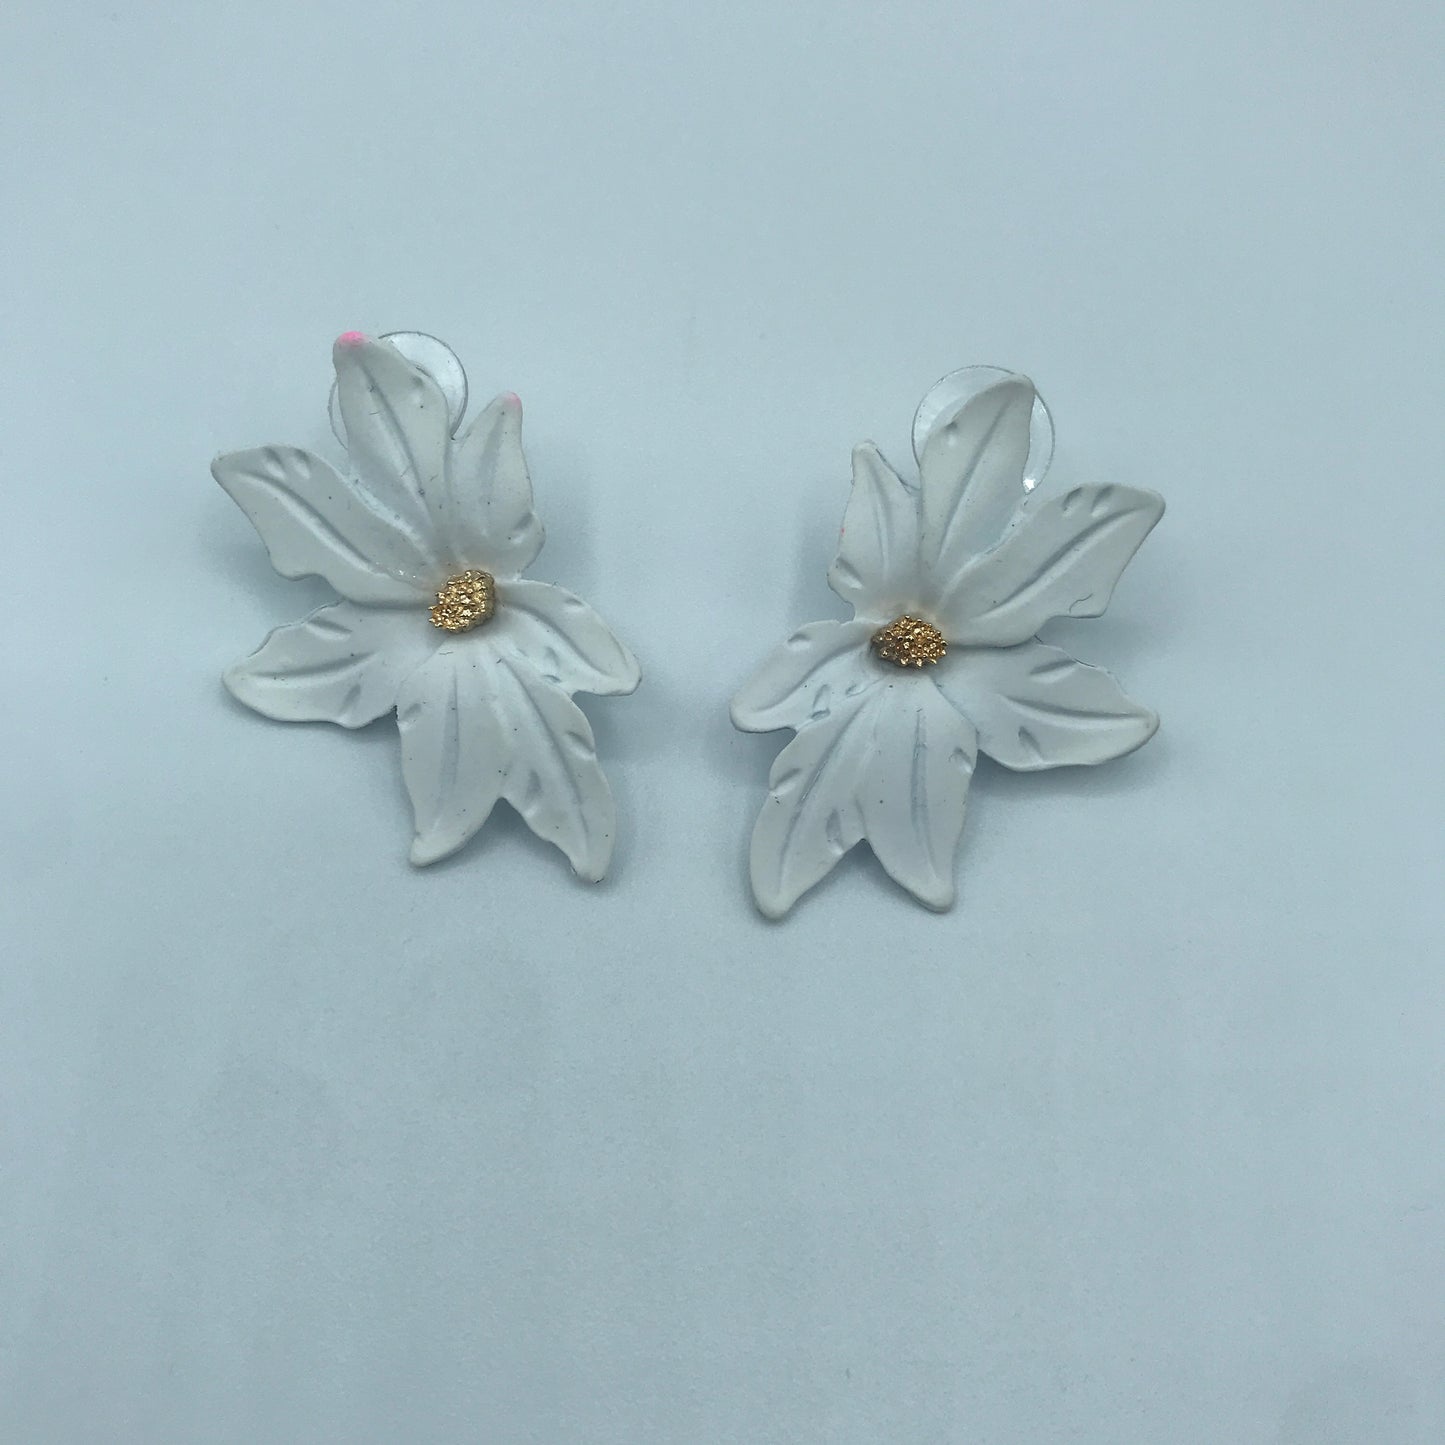 Dramatic flower stud earrings